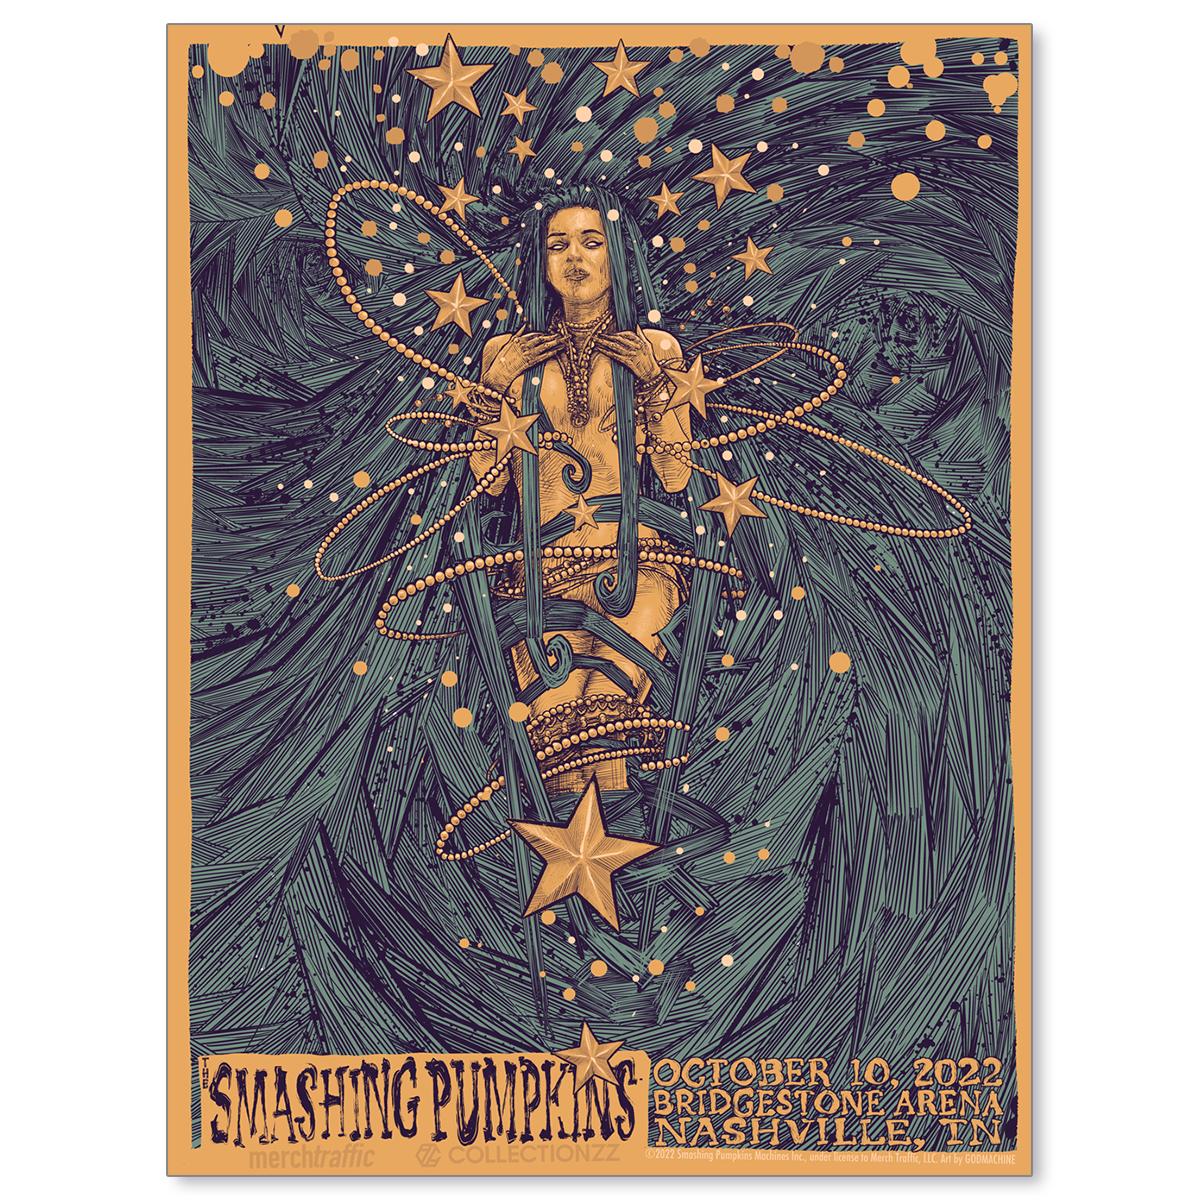 The Smashing Pumpkins Nashville October 10, 2022 Print